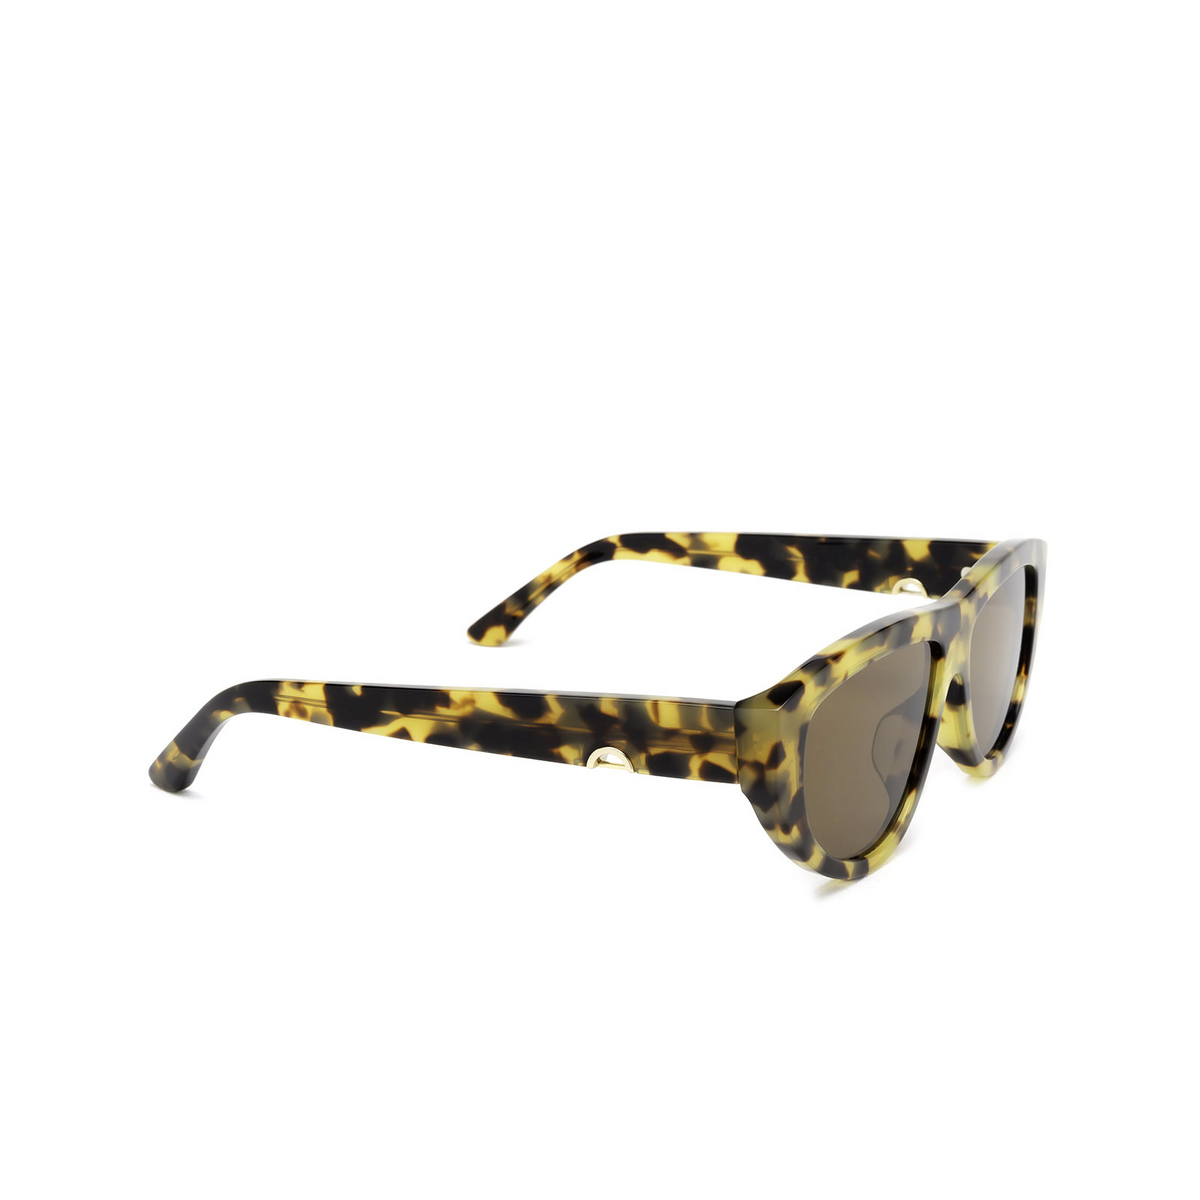 Huma® Oval Sunglasses: Viko color Havana Maculate 19 - three-quarters view.